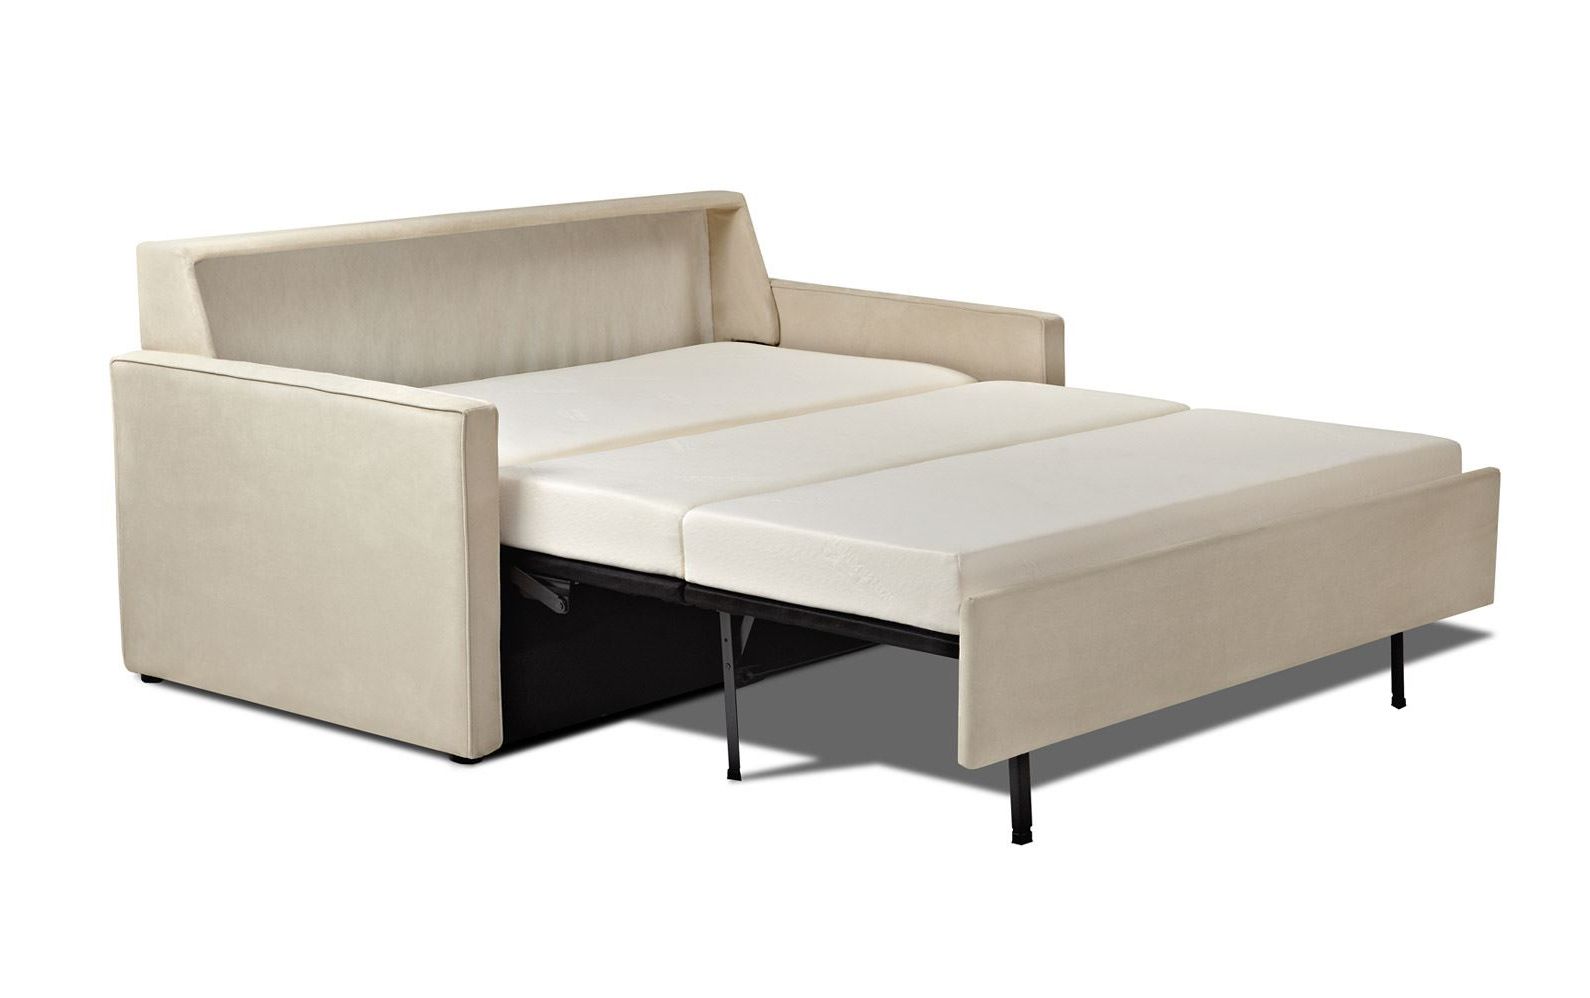 Felton Modern Style Pullout Sleeper Sofas Black Pertaining To Latest Posh Tempurpedic Sofa Bed Design For Fashionable (View 12 of 20)